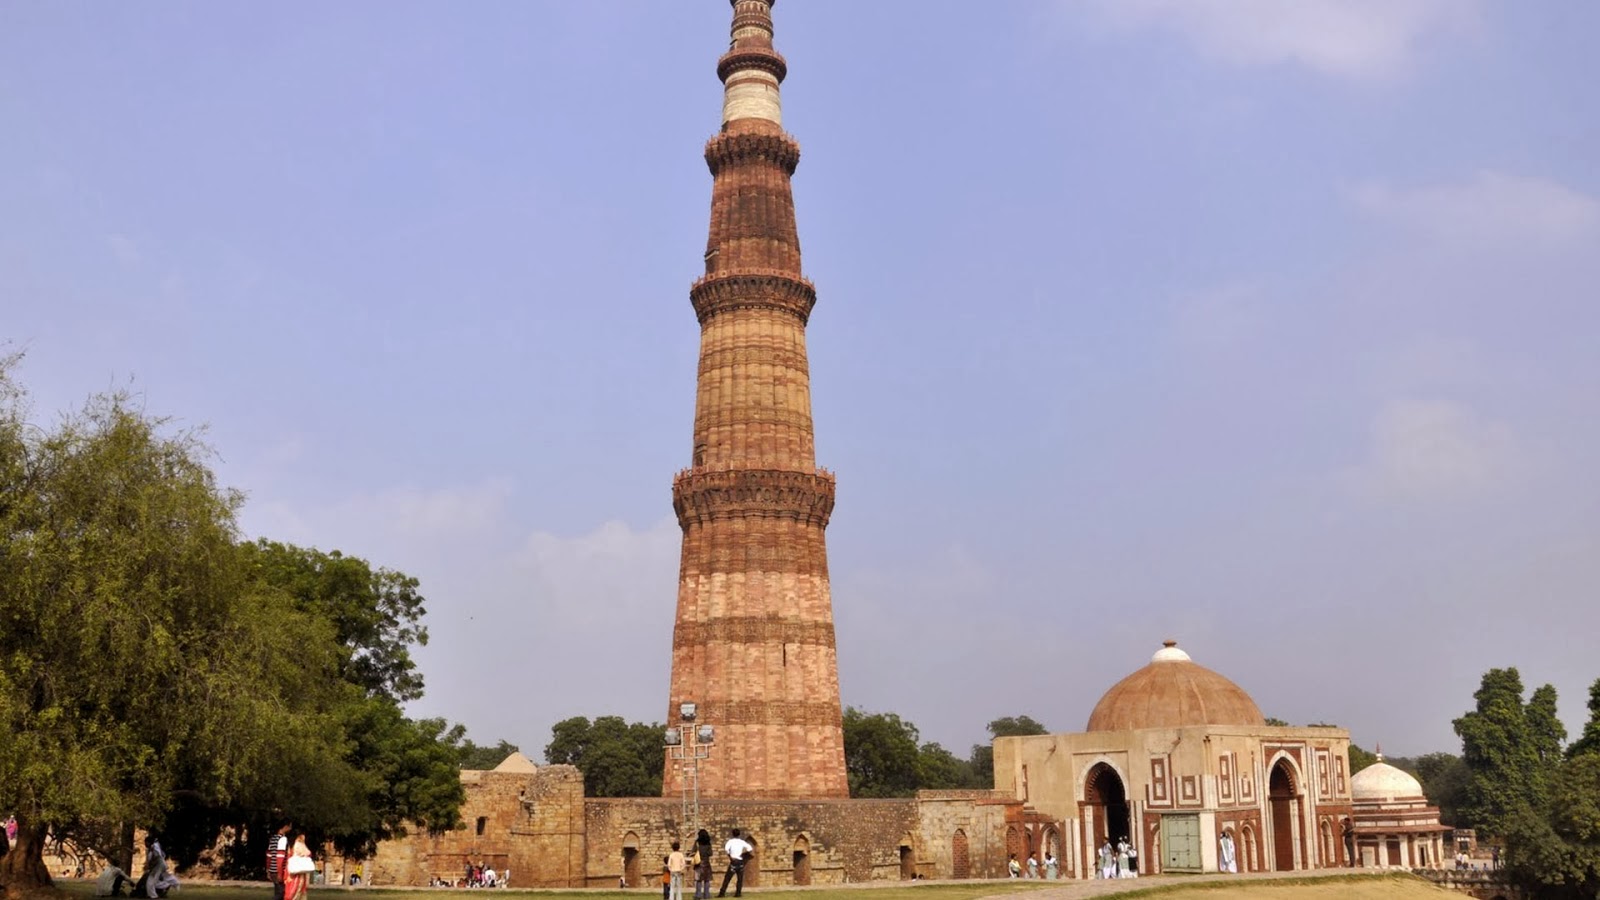 delhi tapete,monument,turm,gebäude,unesco weltkulturerbe,touristenattraktion